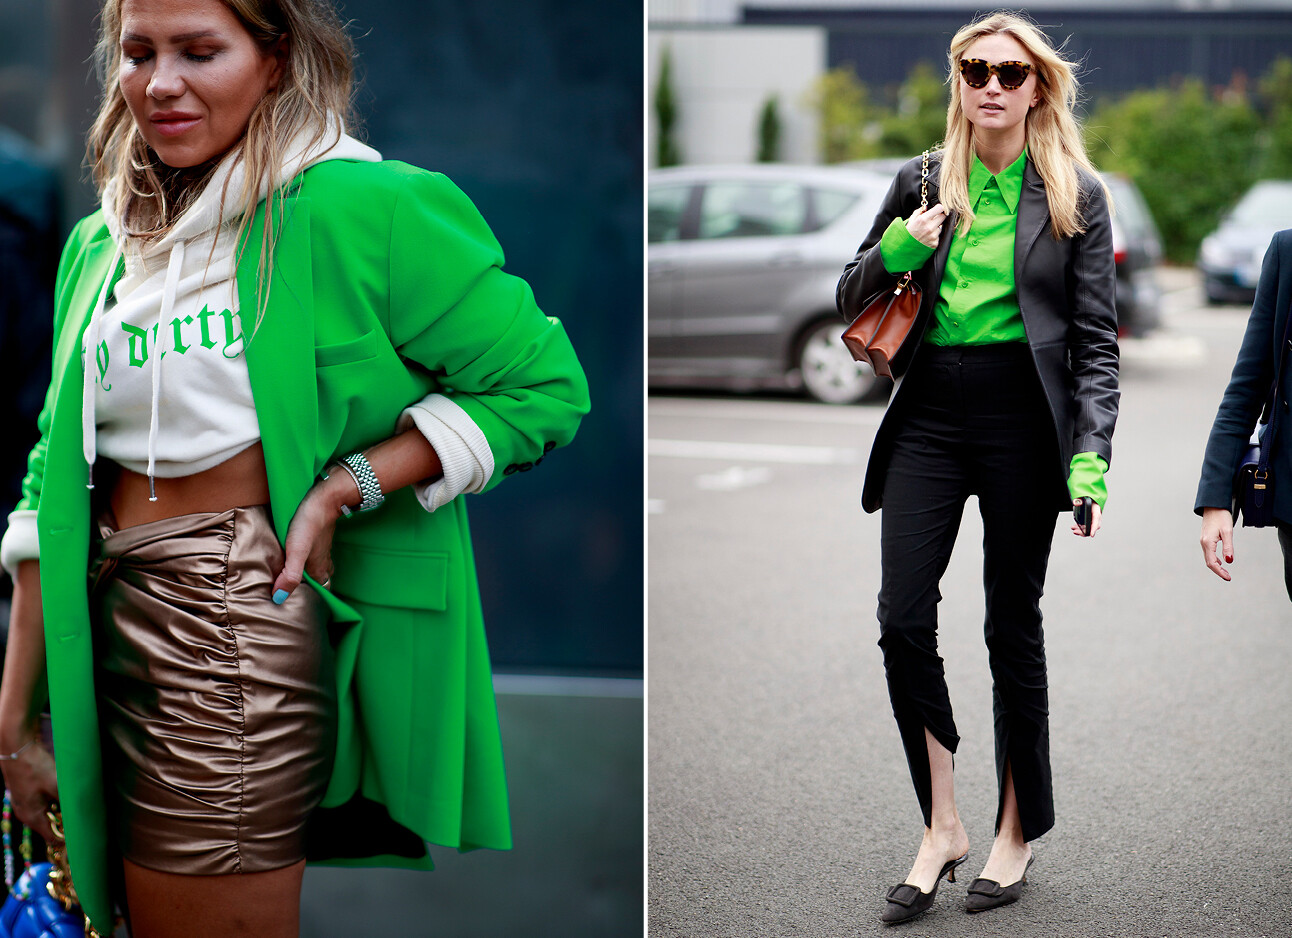 straatmodellen met groene kleding aan